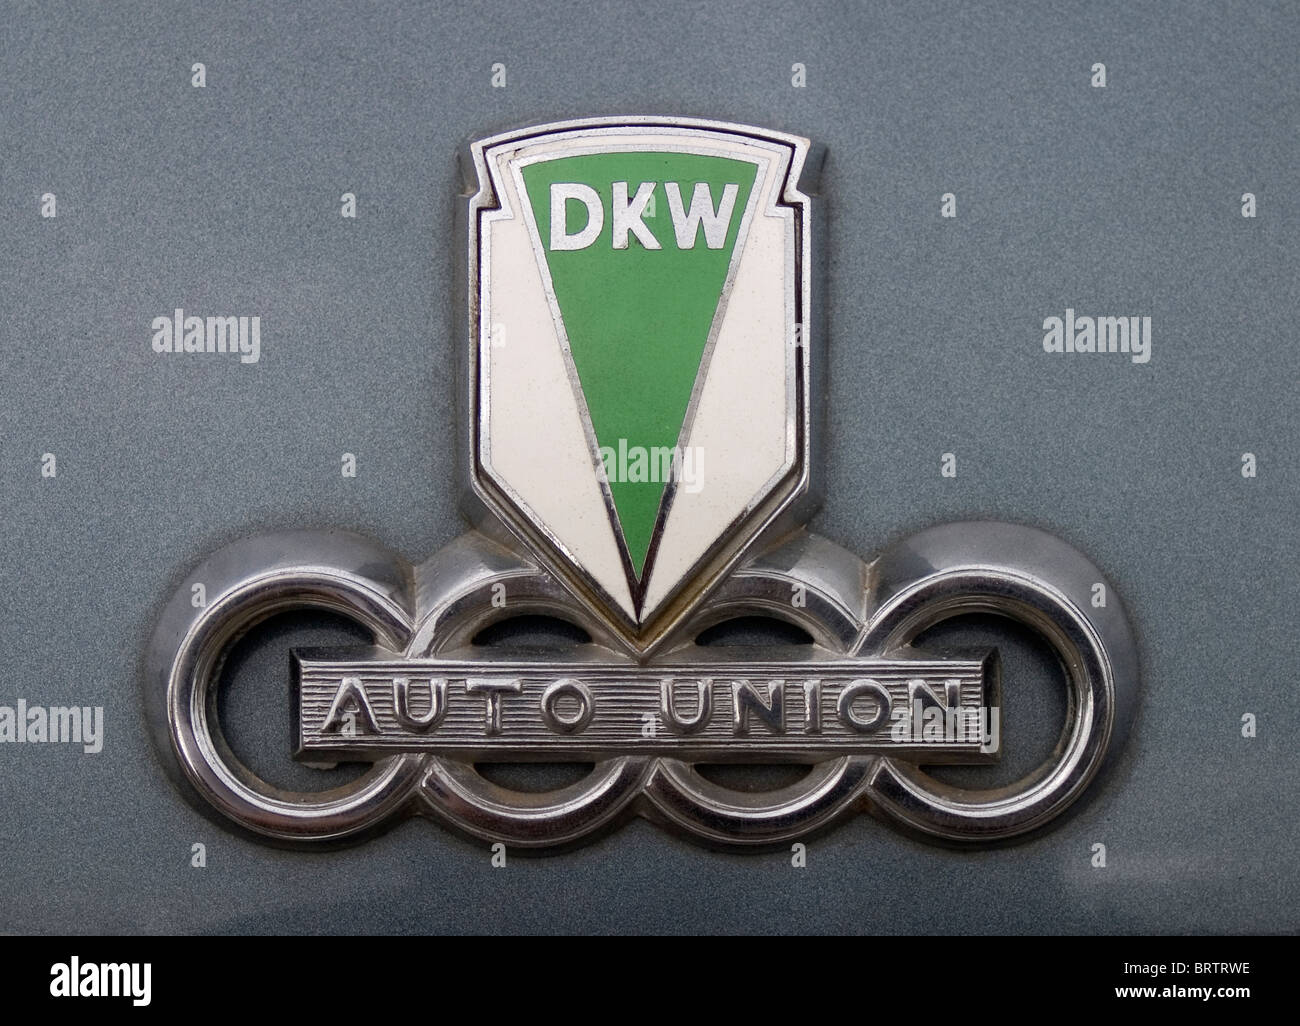 DKW Auto Union Car Badge Stock Photo